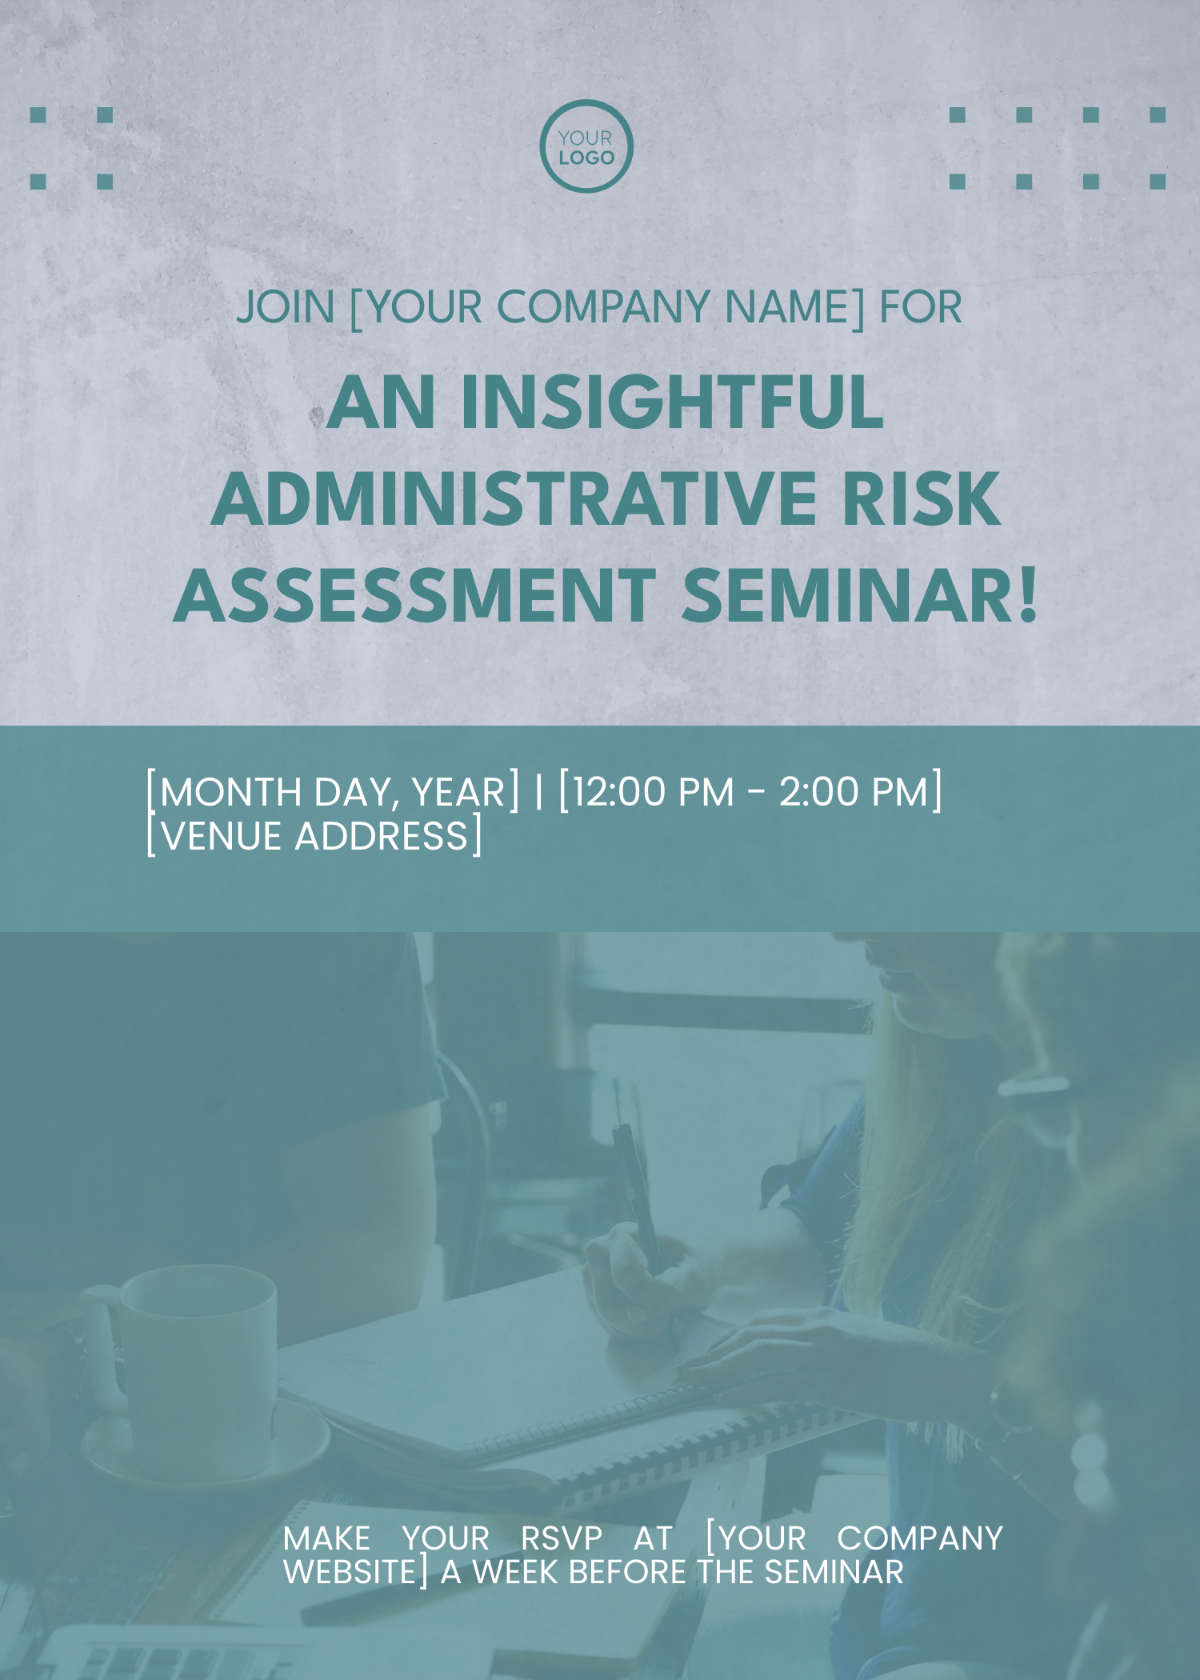 Free Administrative Risk Assessment Seminar Invitation Card Template